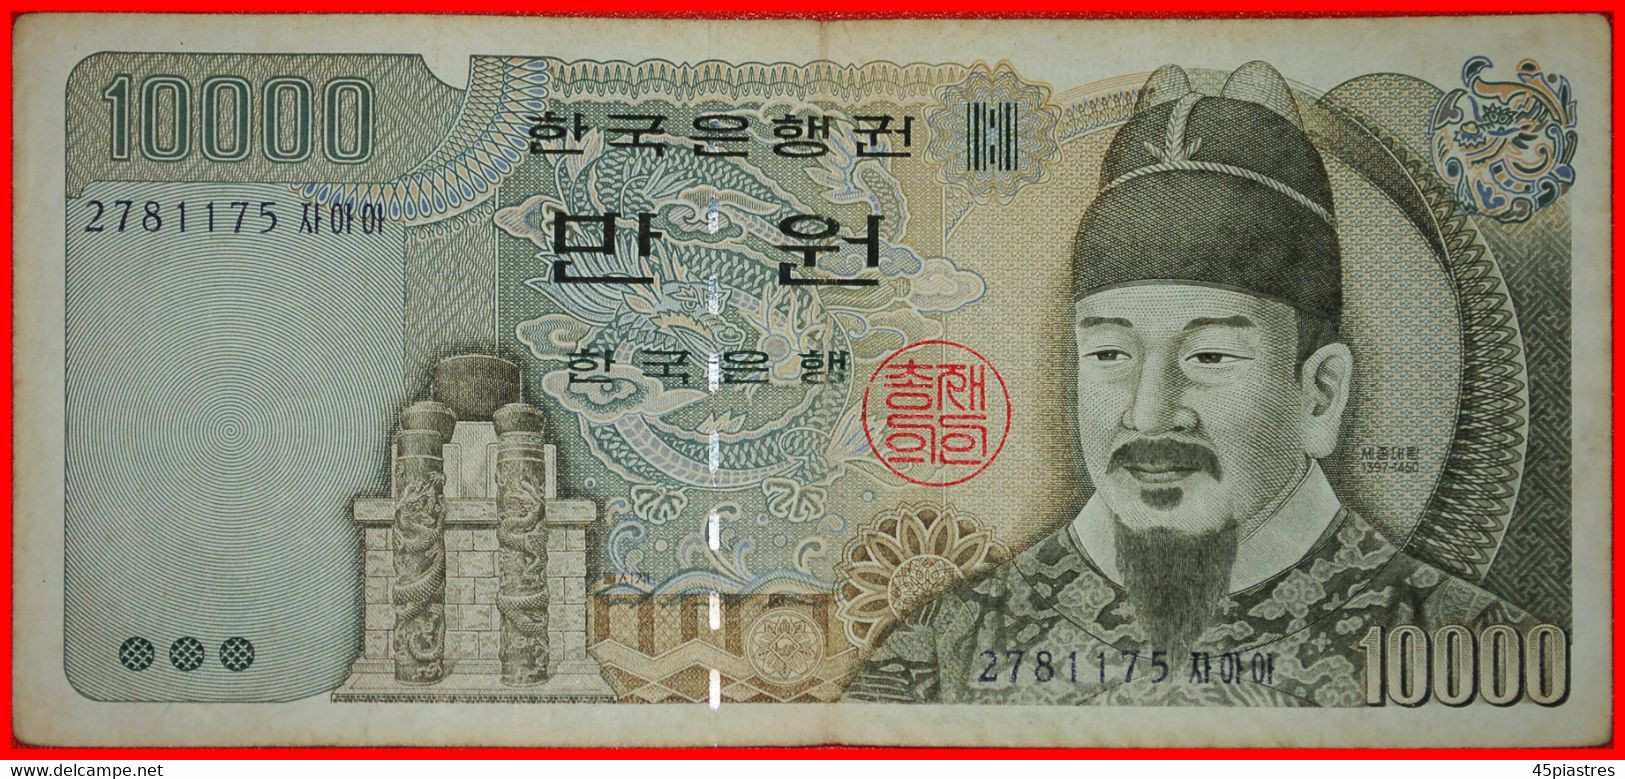 * SEJON THE GREAT (1397–1450): SOUTH KOREA ★ 10000 WON (1994) TO BE PUBLISHED! CRISP! LOW START ★ NO RESERVE! - Korea, South